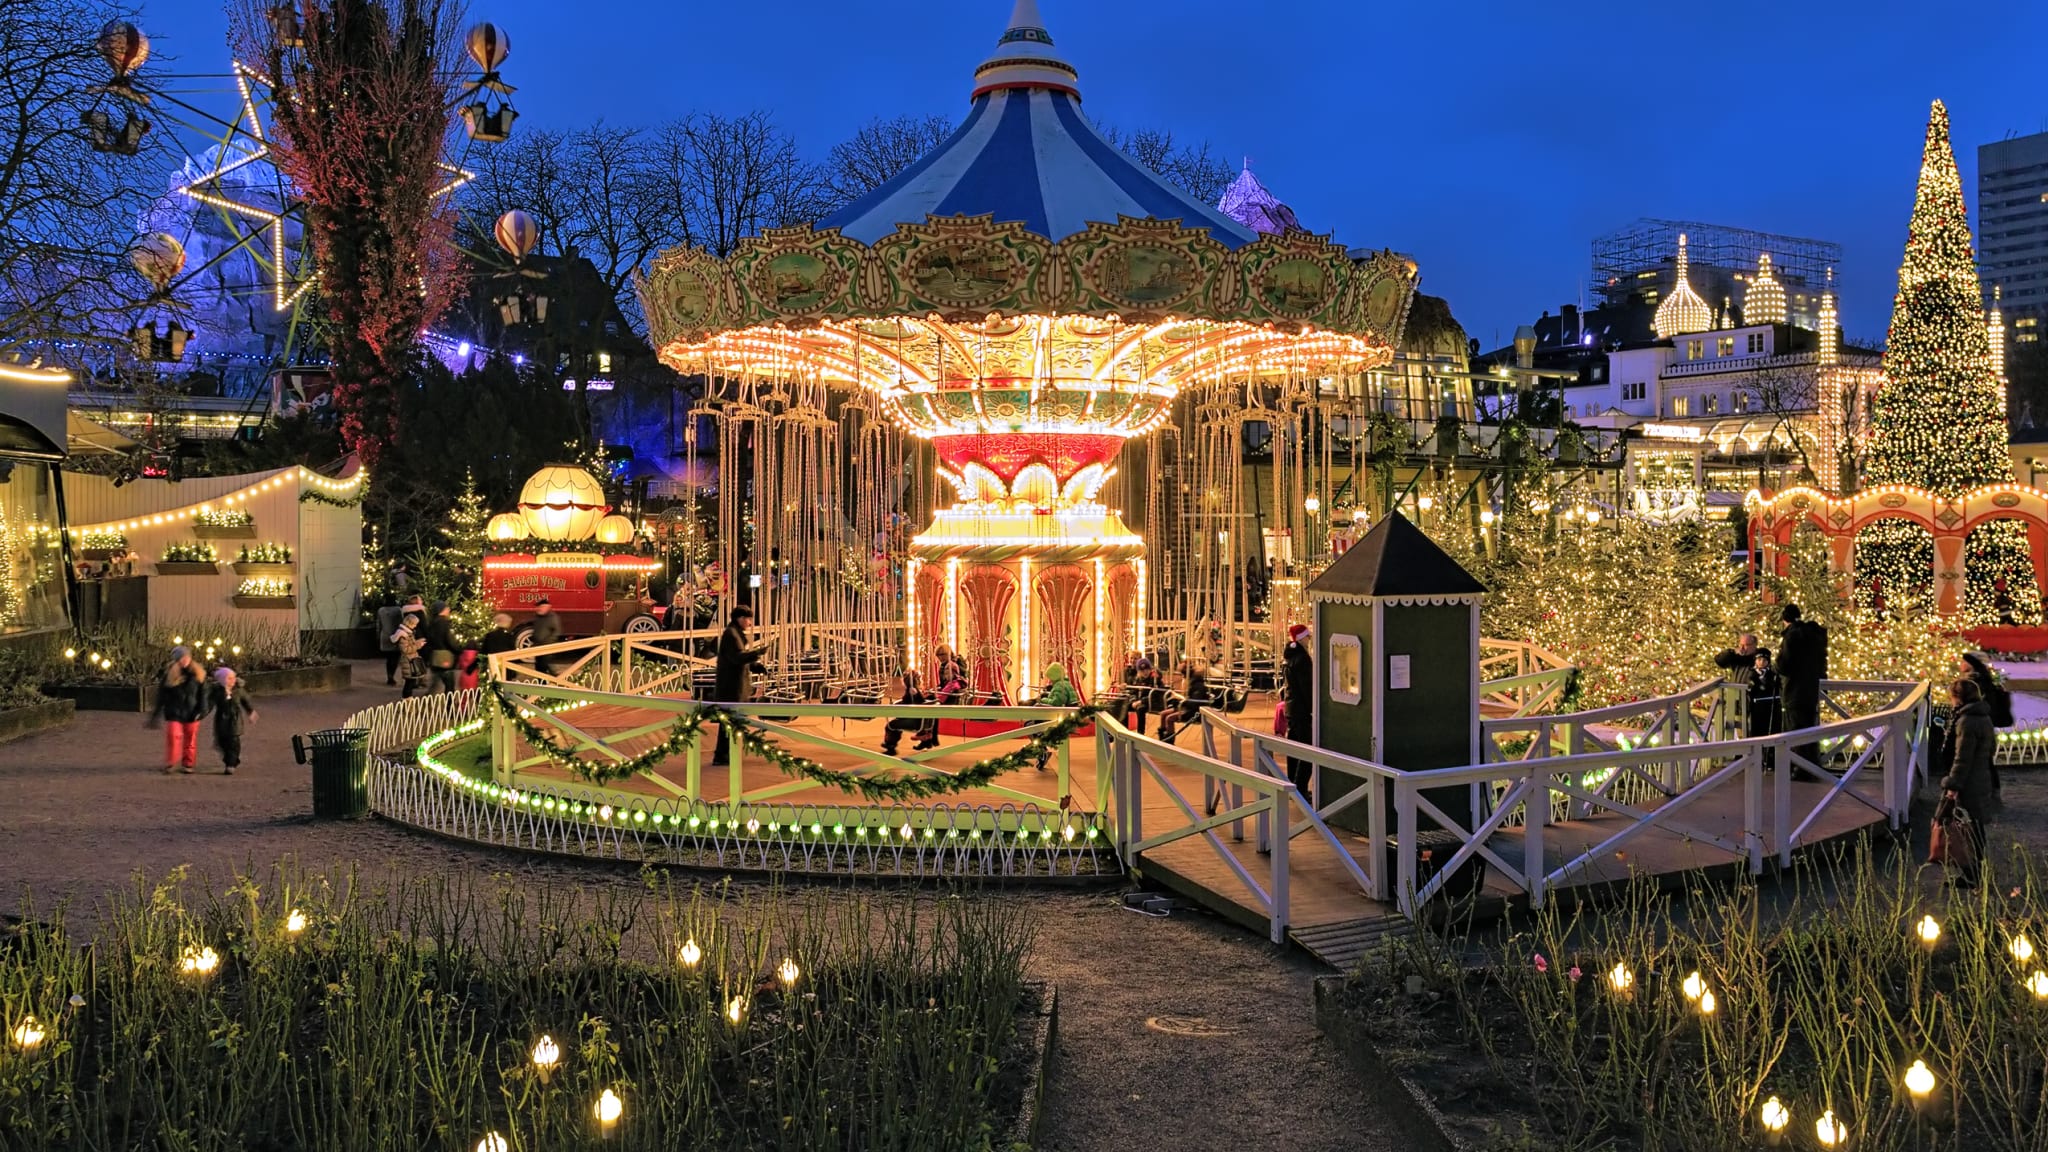 Tivoli Gardens in Kopenhagen © klug-photo/iStock Editorial / Getty Images Plus via Getty Images